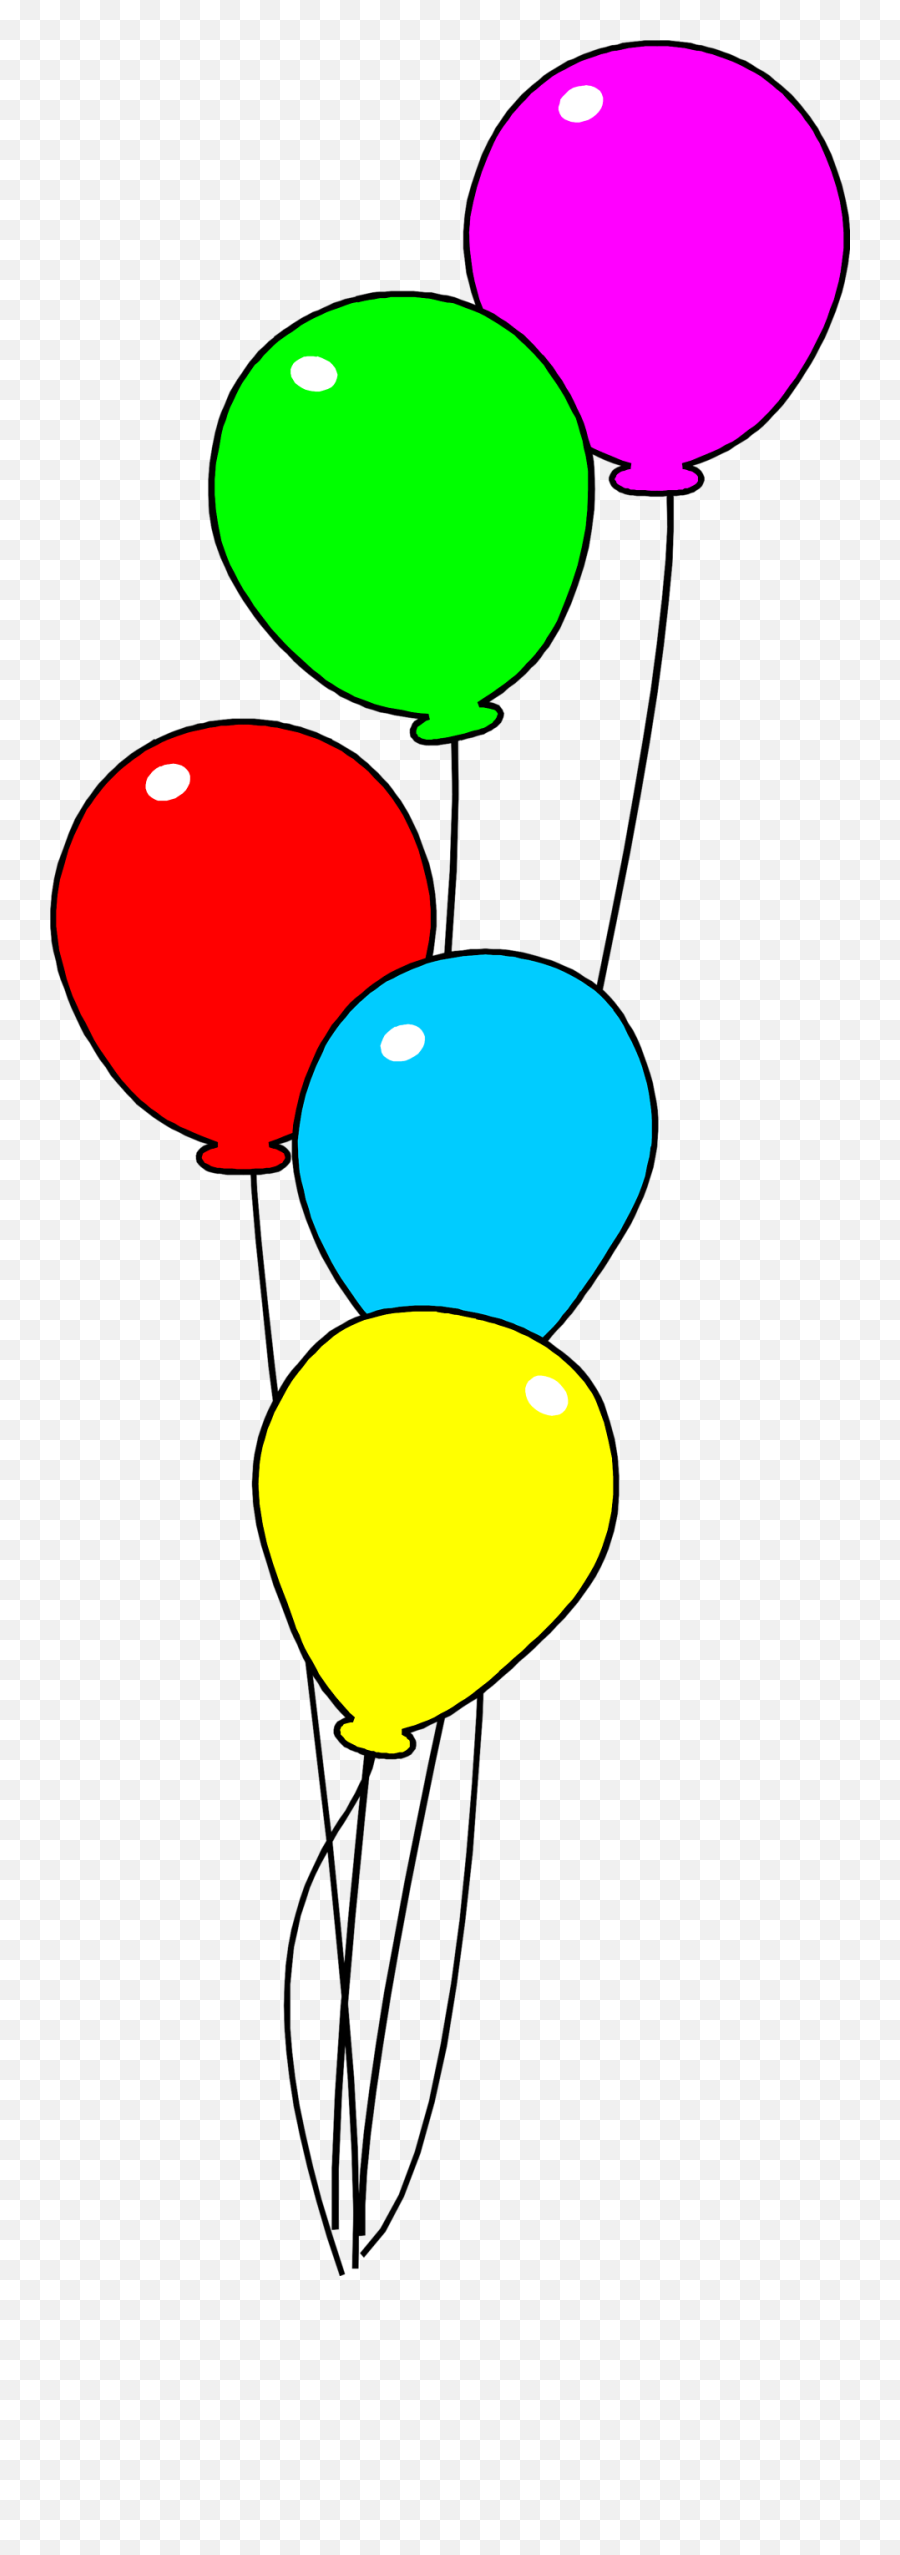 Free Balloon Png Art - Clipart Best Clipartsco Transparent Background Balloon Clip Art,Balloons Png Transparent Background